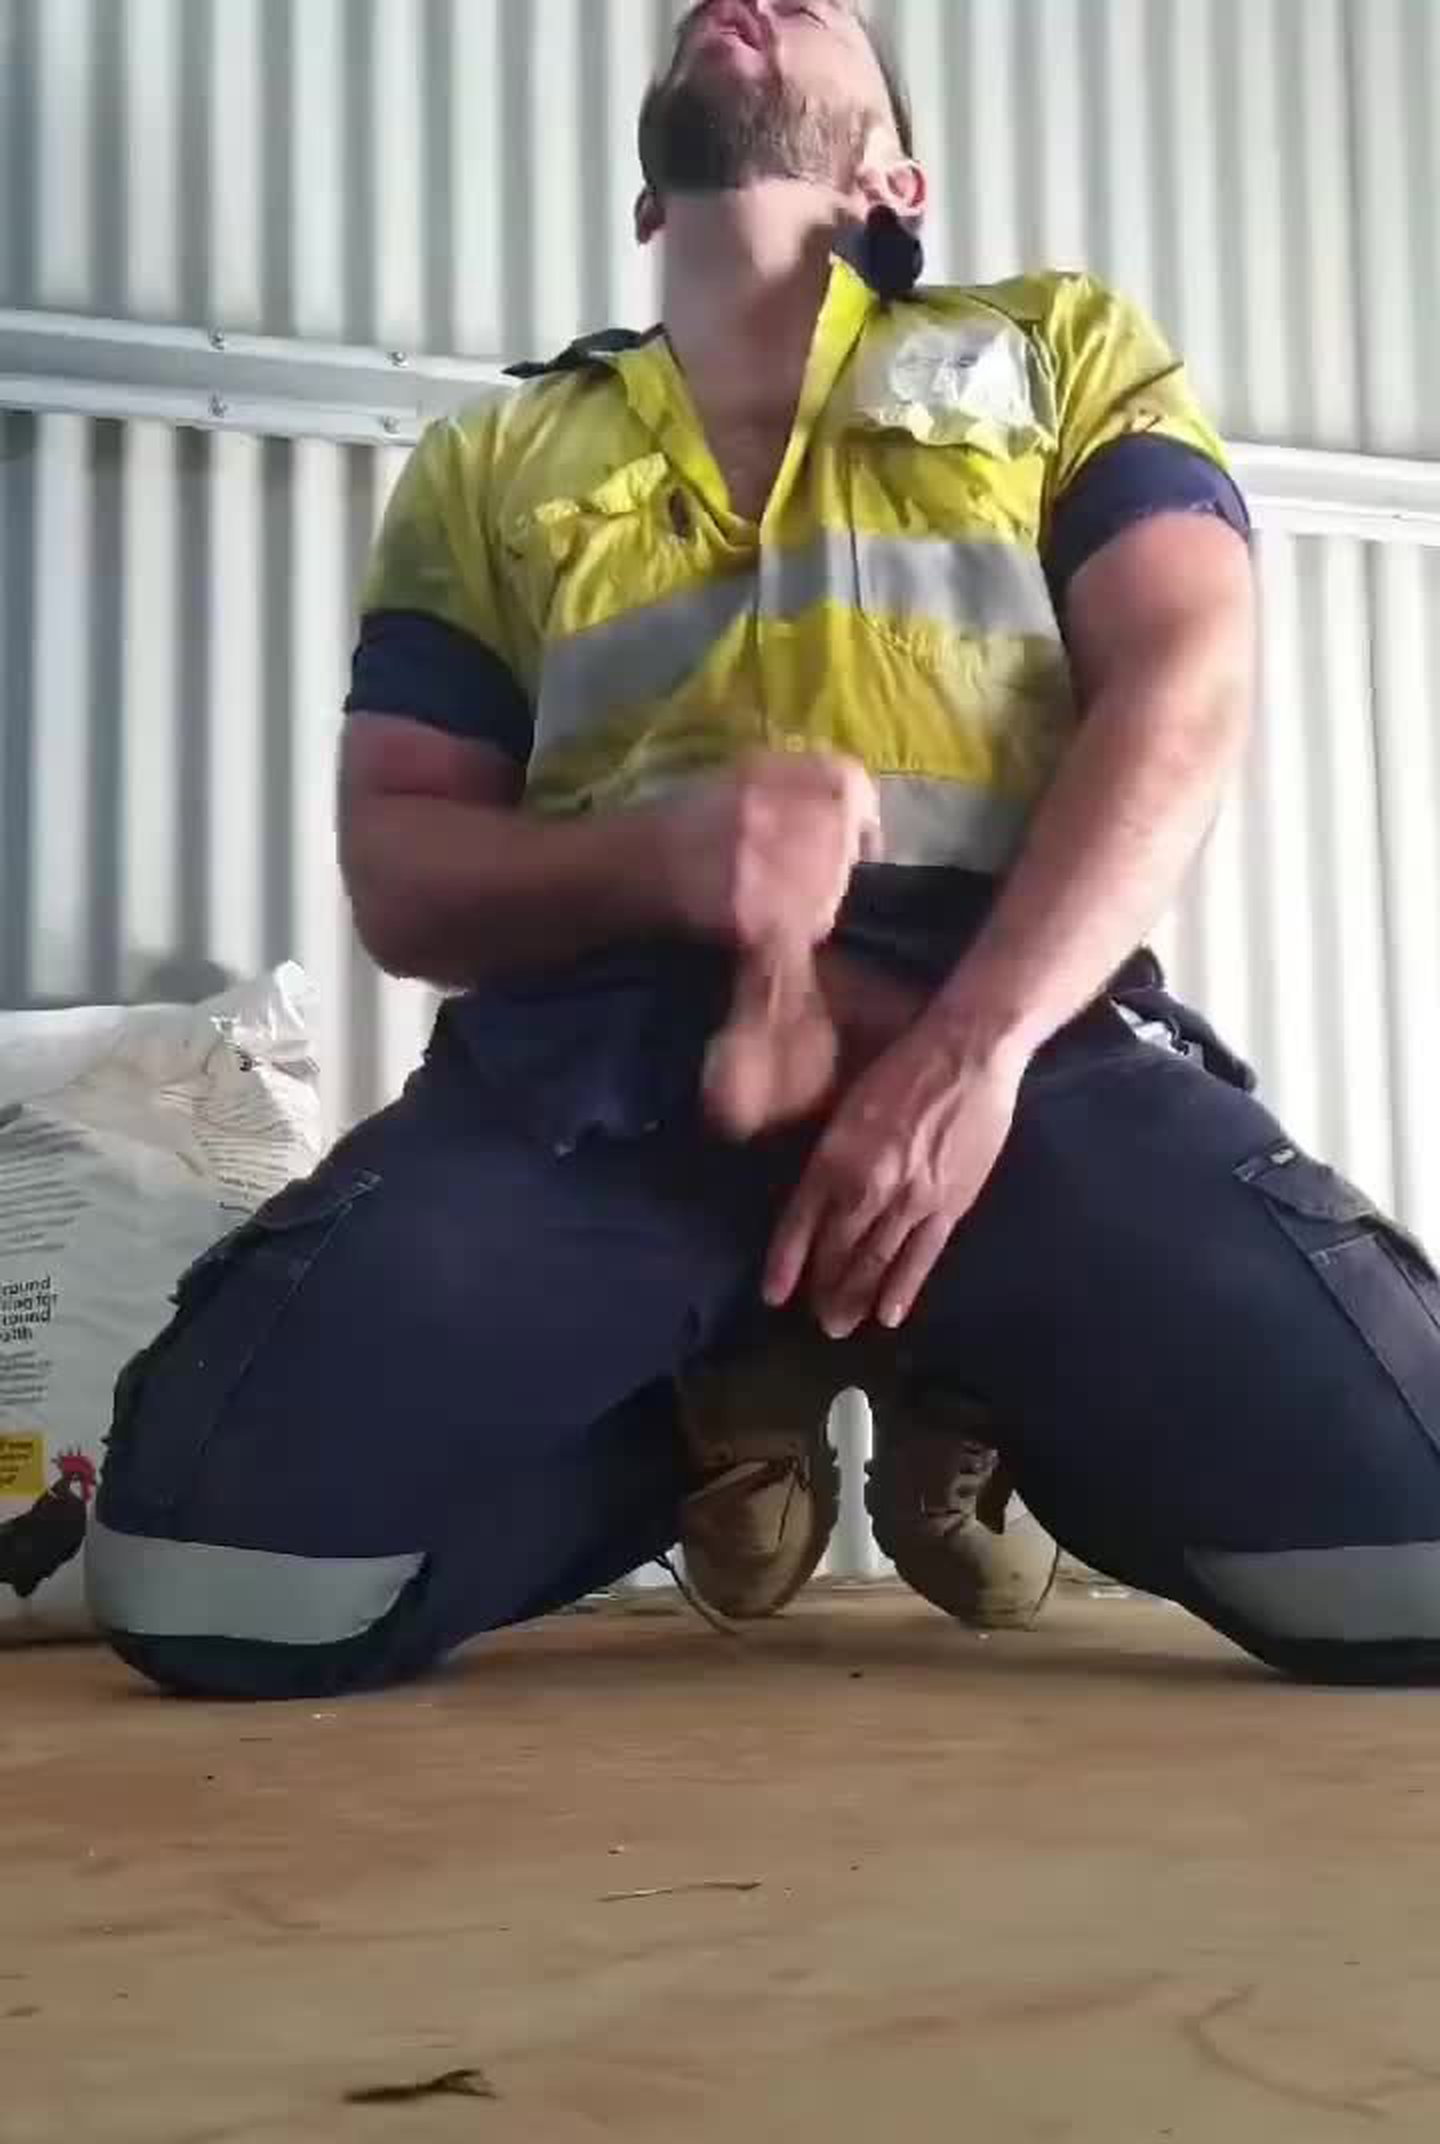 Video post by AussieHardinboy32